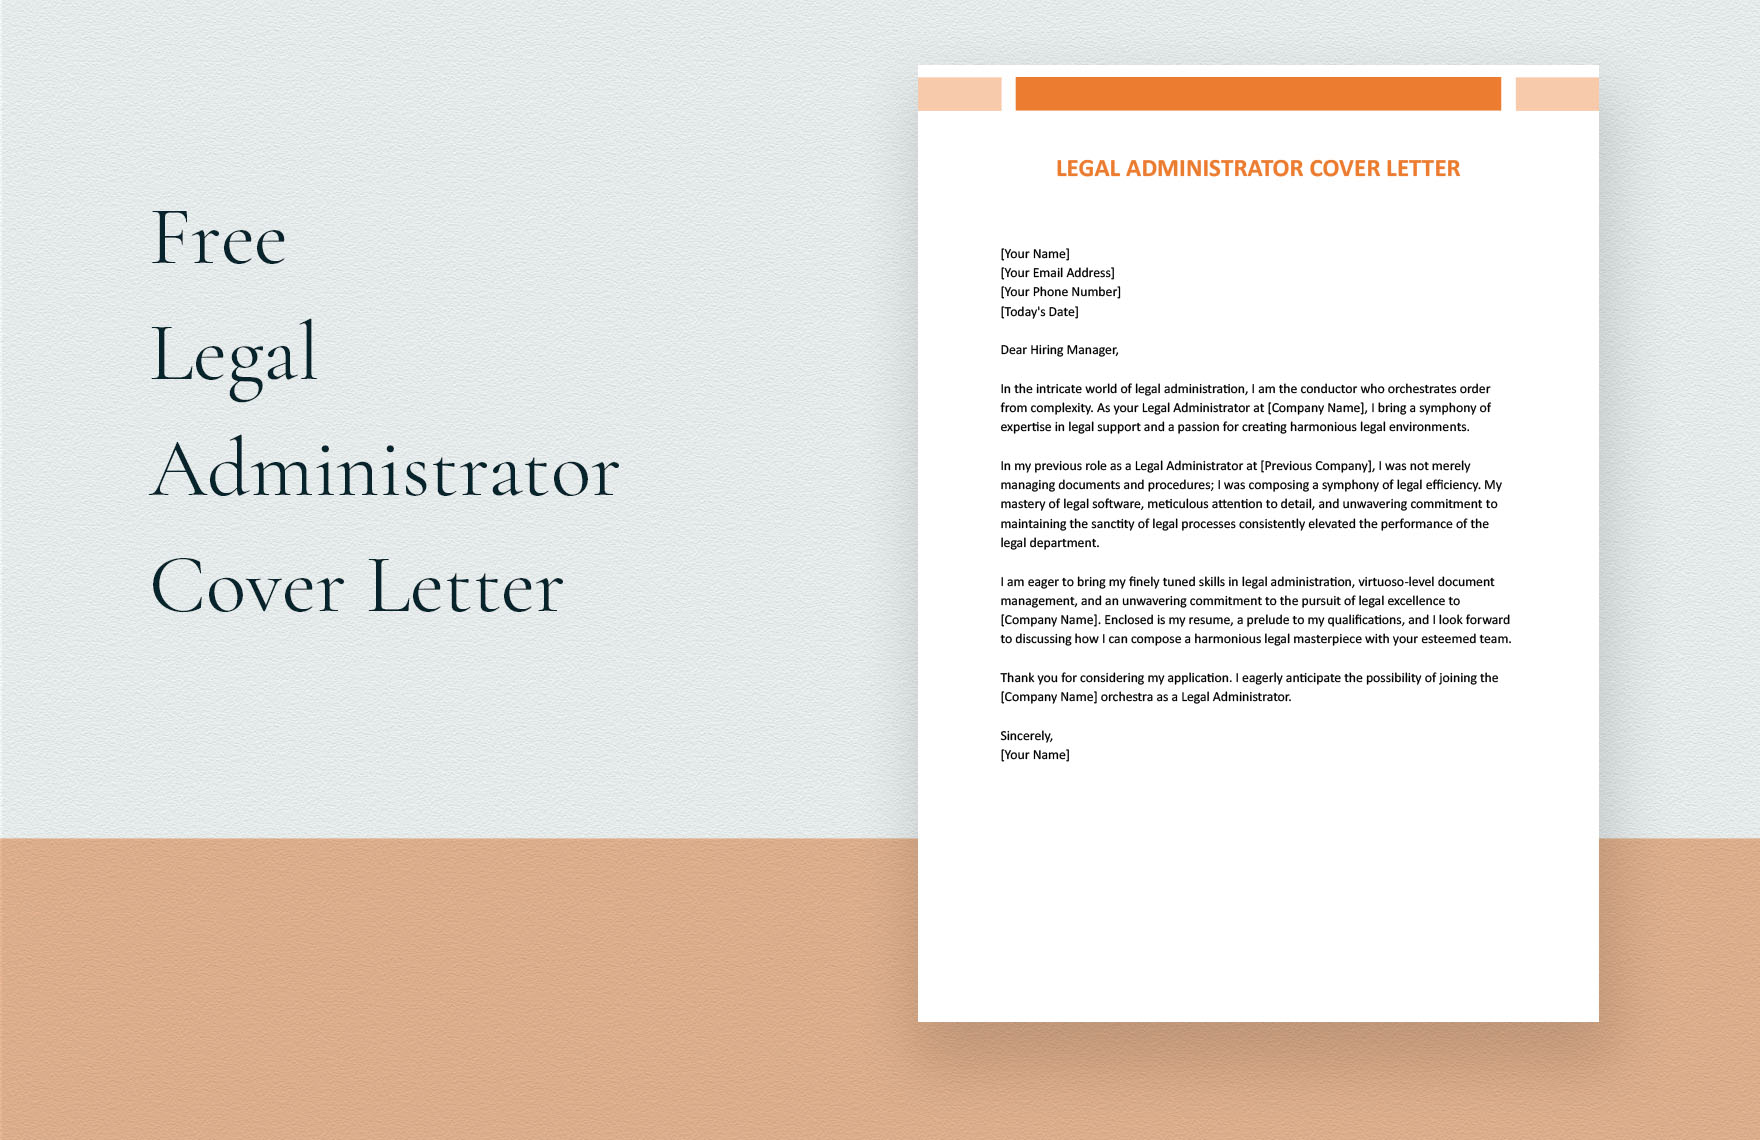 Legal Administrator Cover Letter